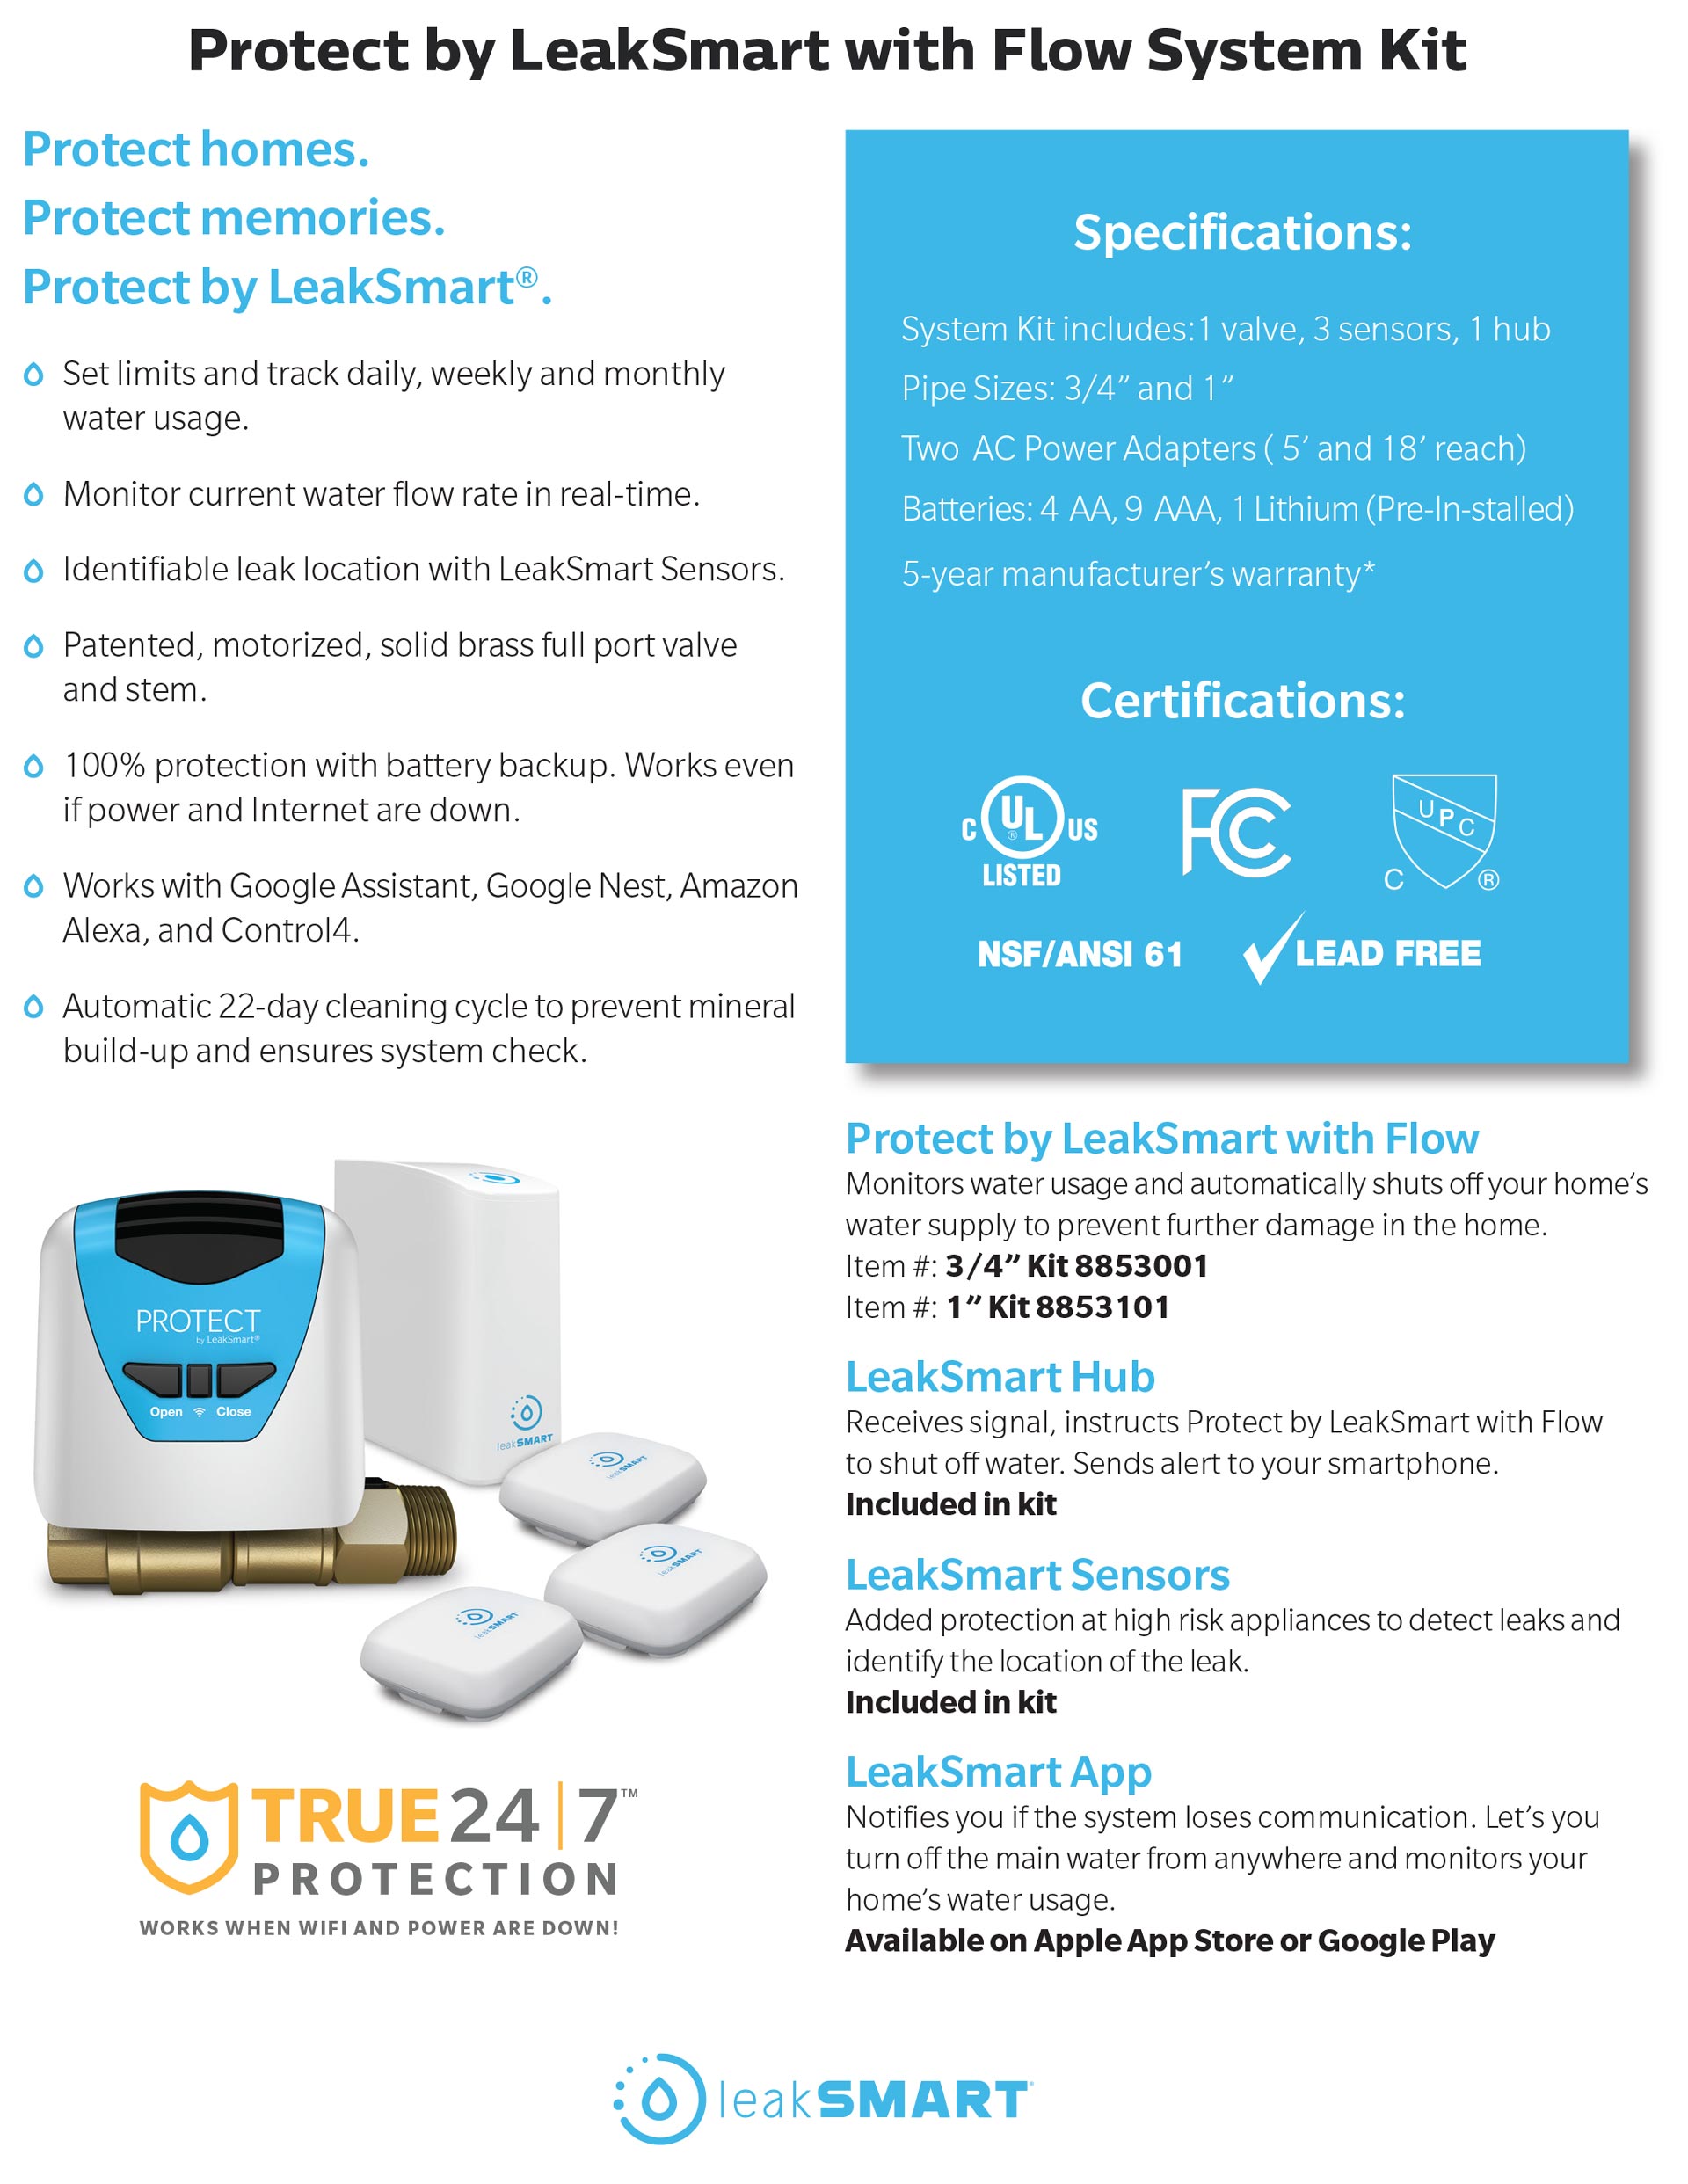 LeakSmart, smart leak home water leak protection, flow system kit